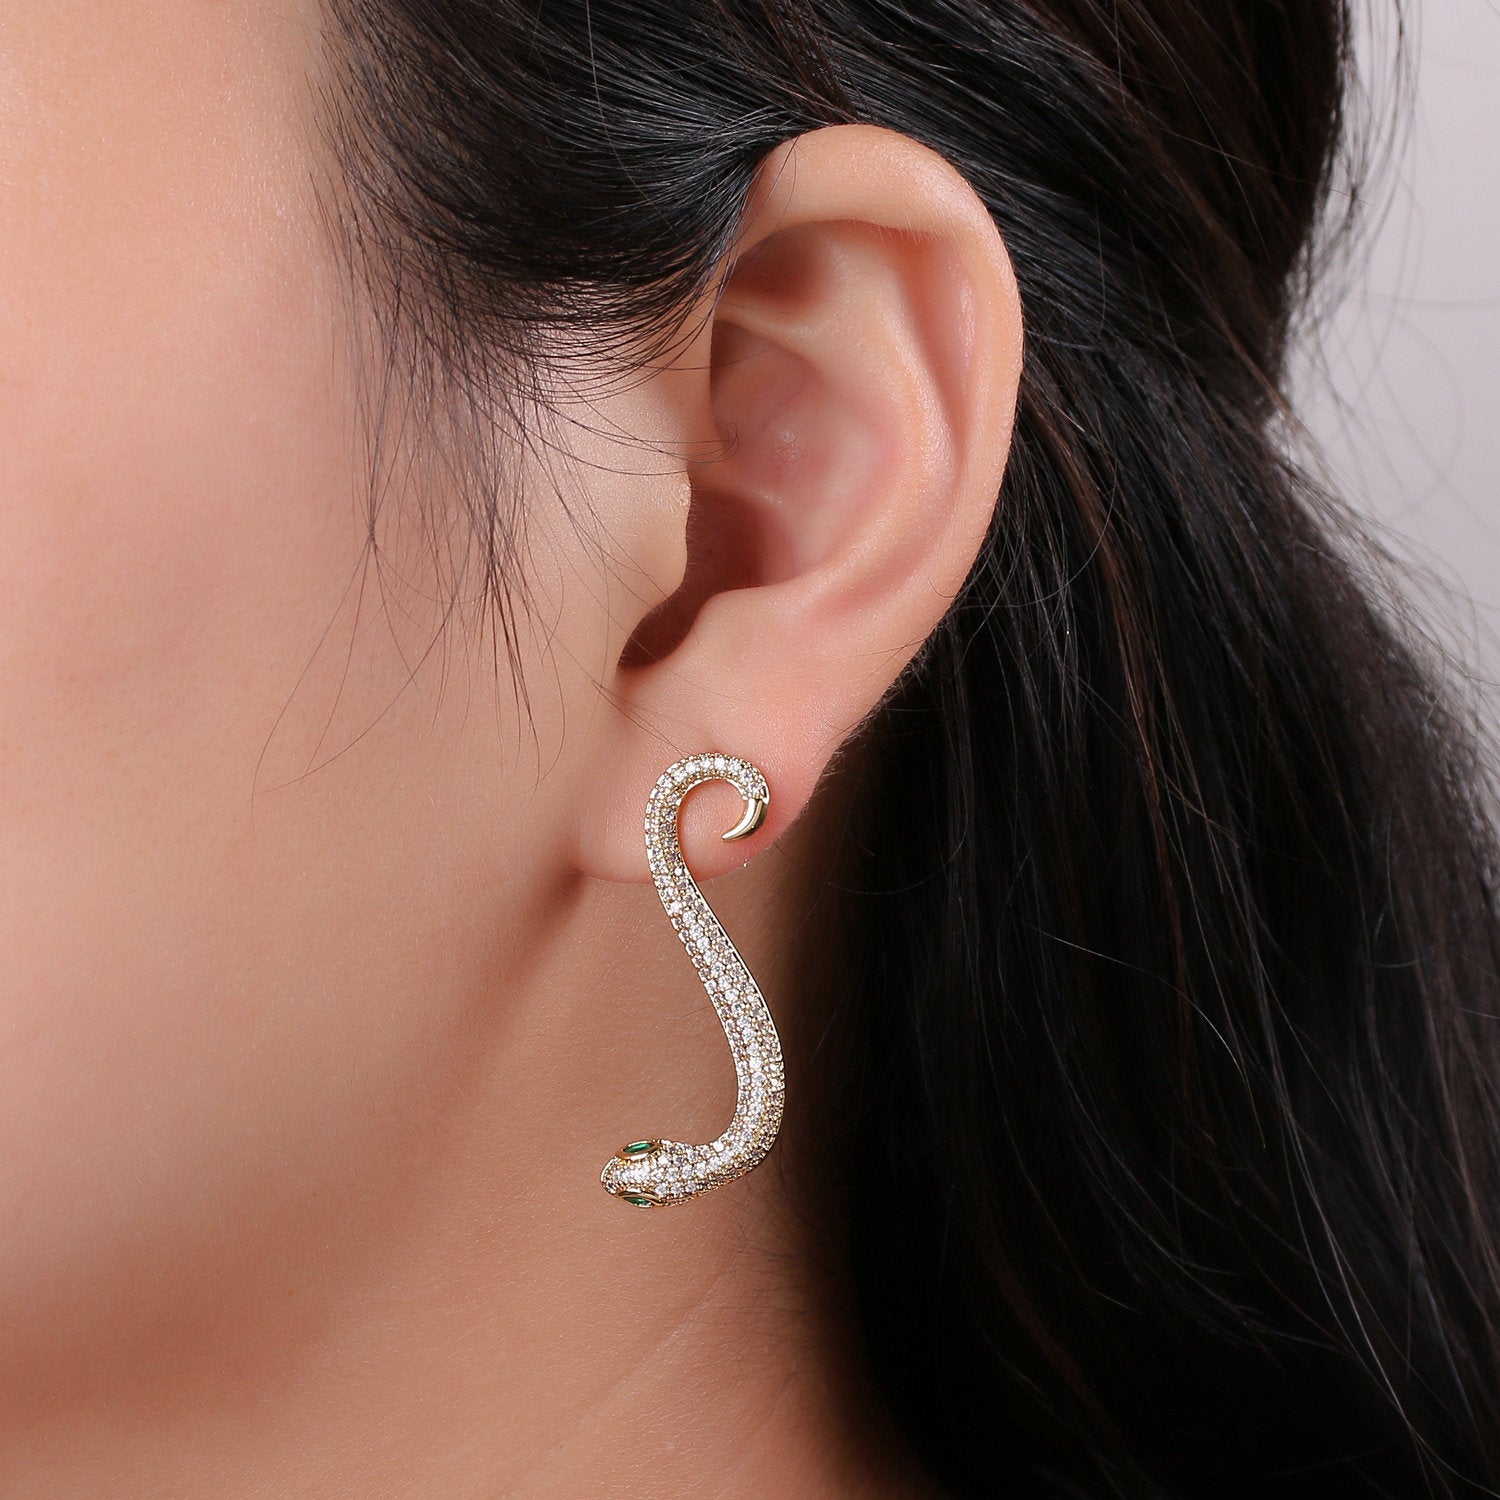 Gold snake earrings asp cleopatra toga serpent dangle 40mm long lightweight earrings Serpent snake Jewelry Micro pave Stud Earring - DLUXCA